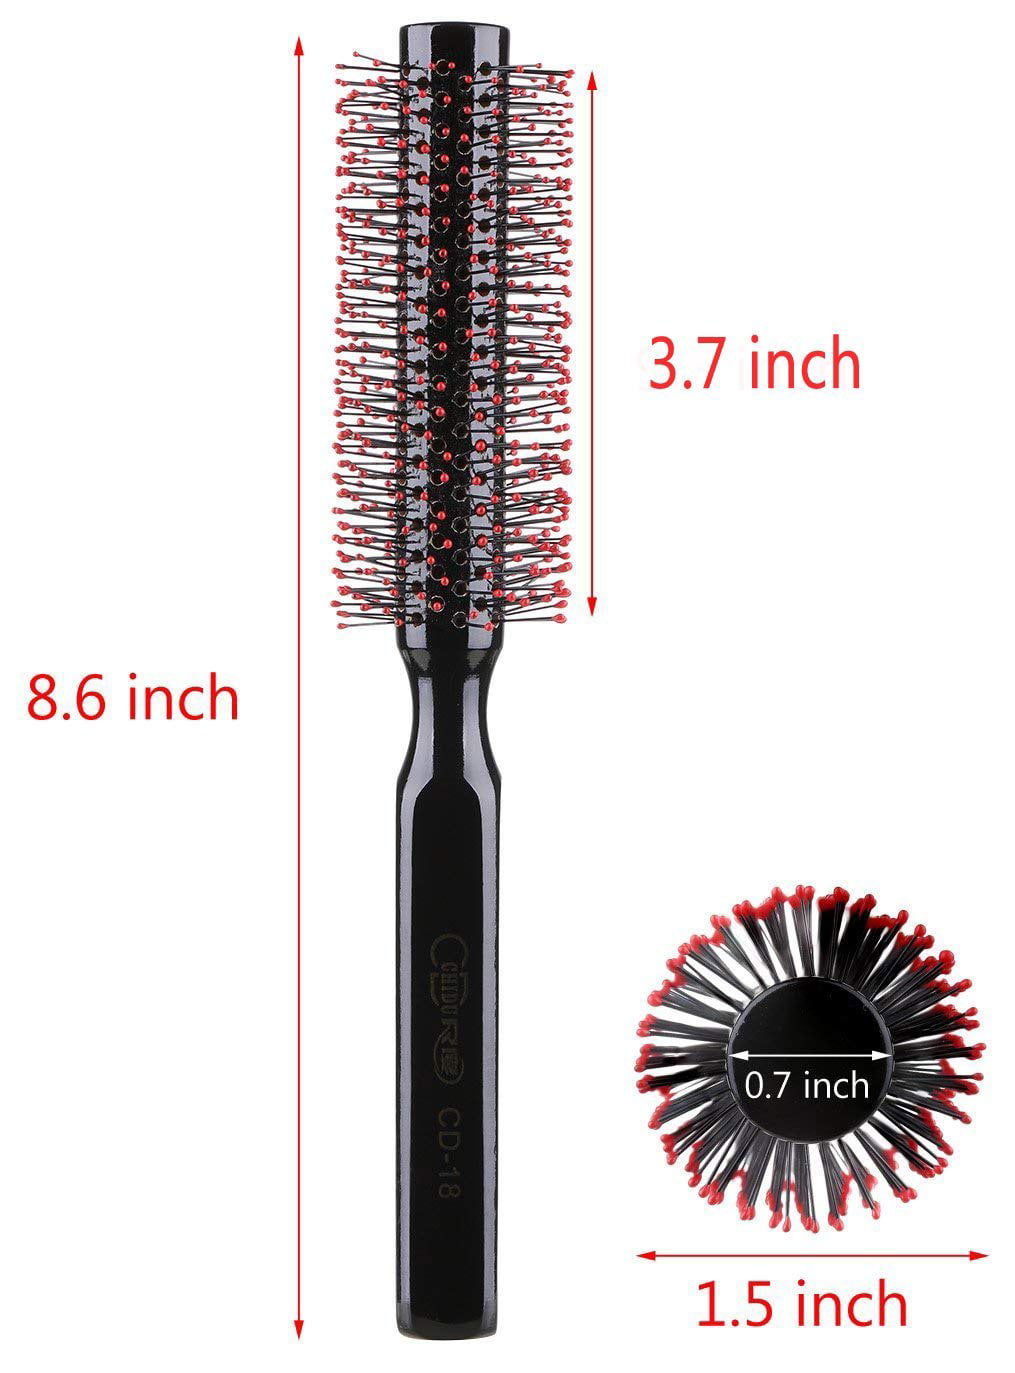 Cleanroom Brush: Short Handle, Priced Per Each, PF-3020